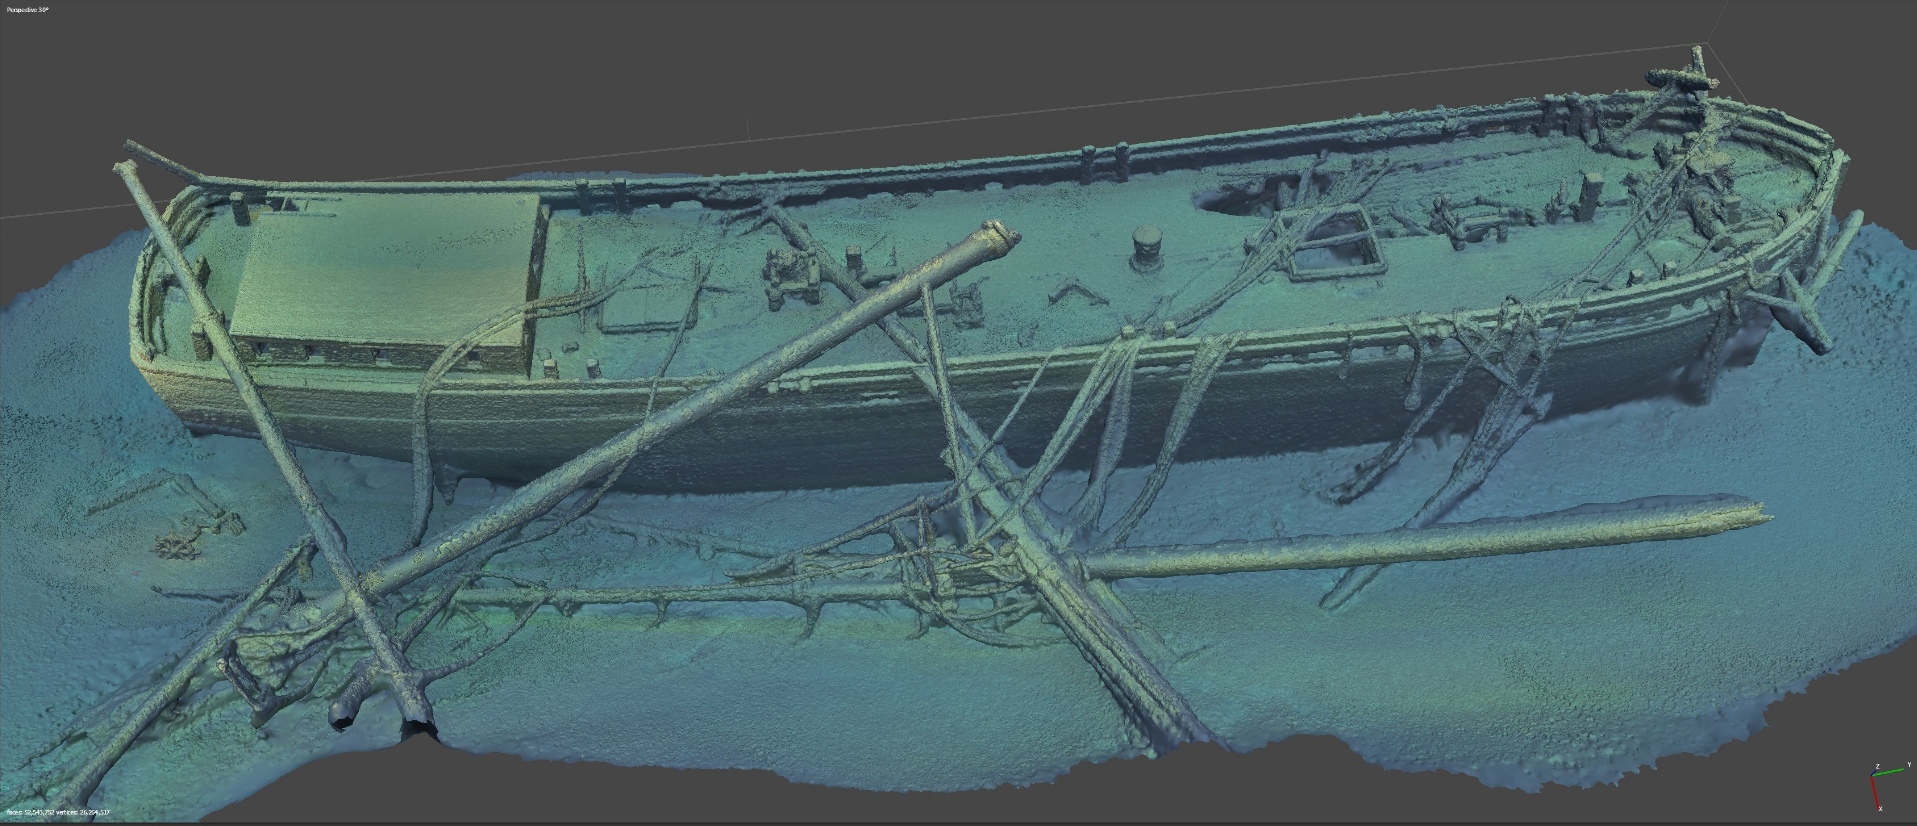 Imaging of the ship Schooner Trinidad shipwreck.